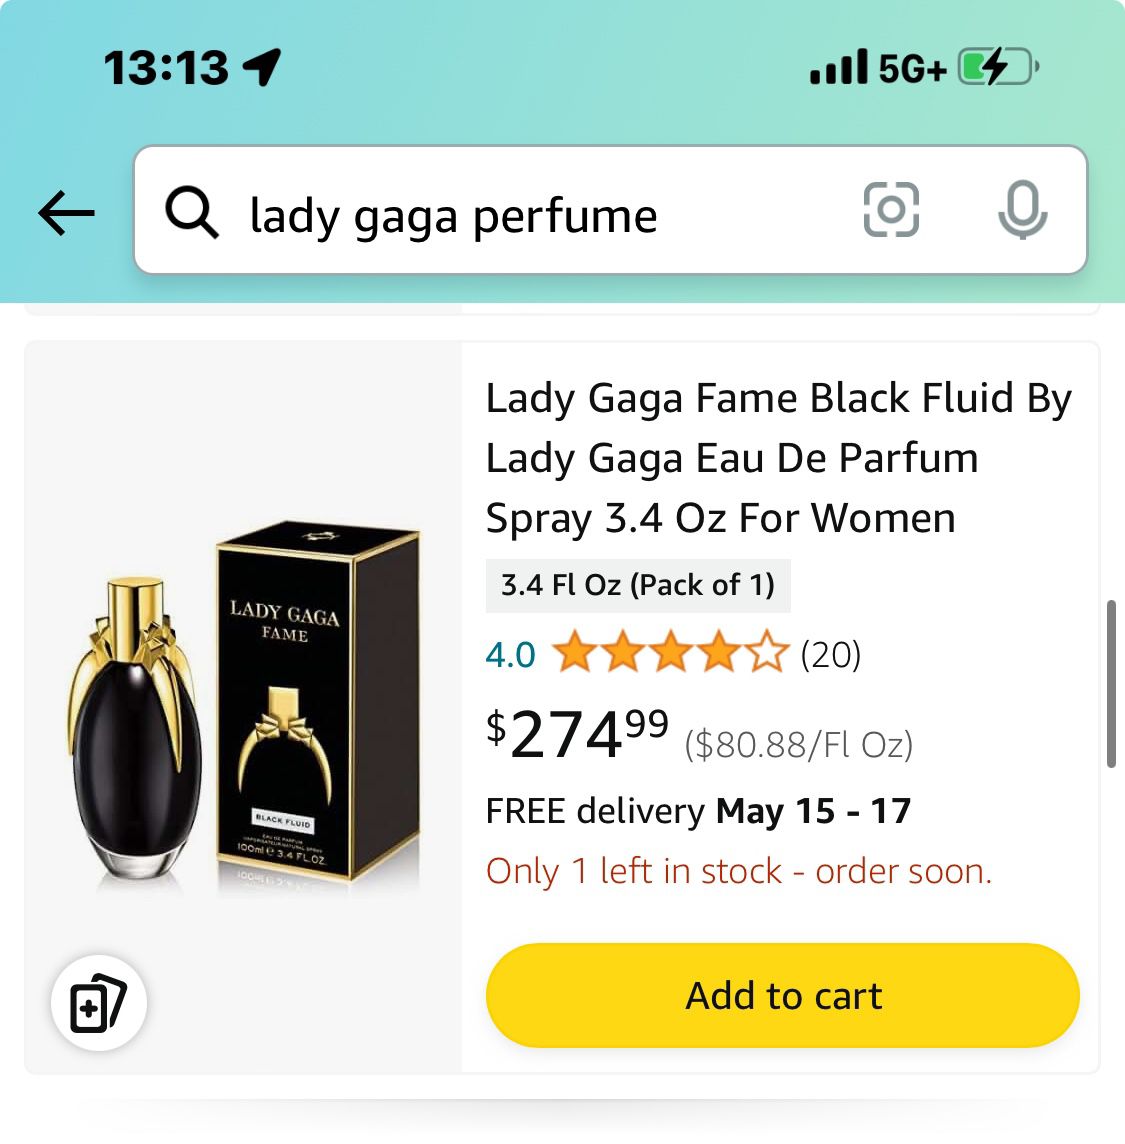 Lady Gaga Perfume 3.4 Oz $80